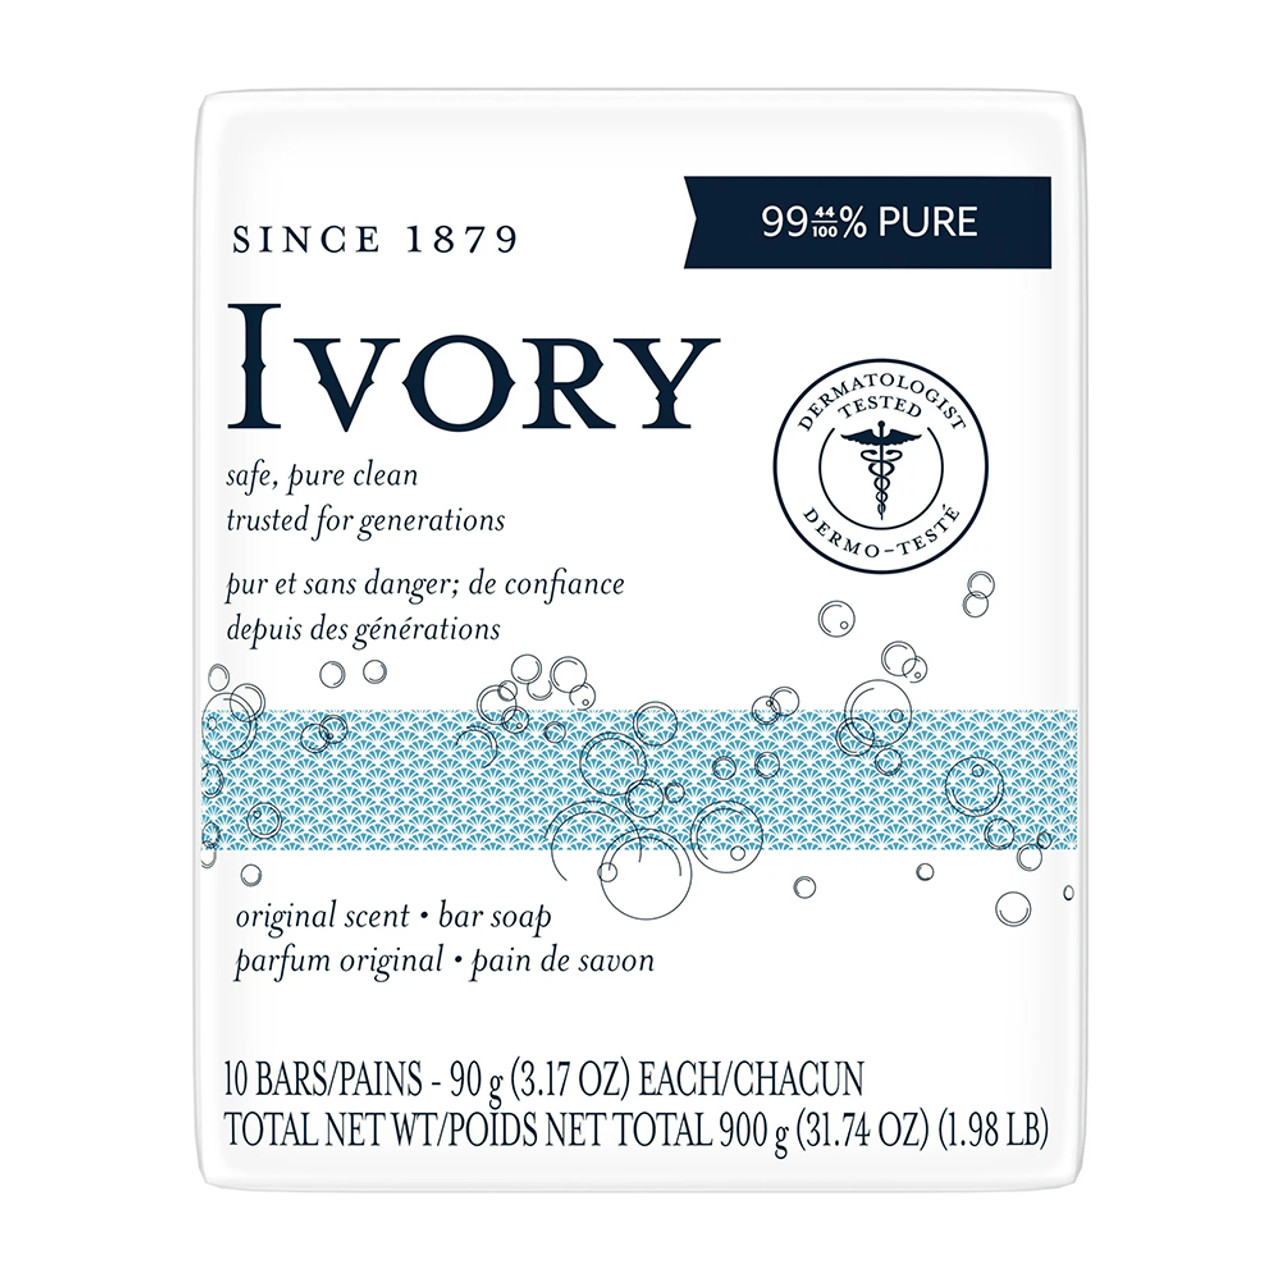 Ivory Bar Soap, 3.1 oz bars, 3 ea (Pack of 10)